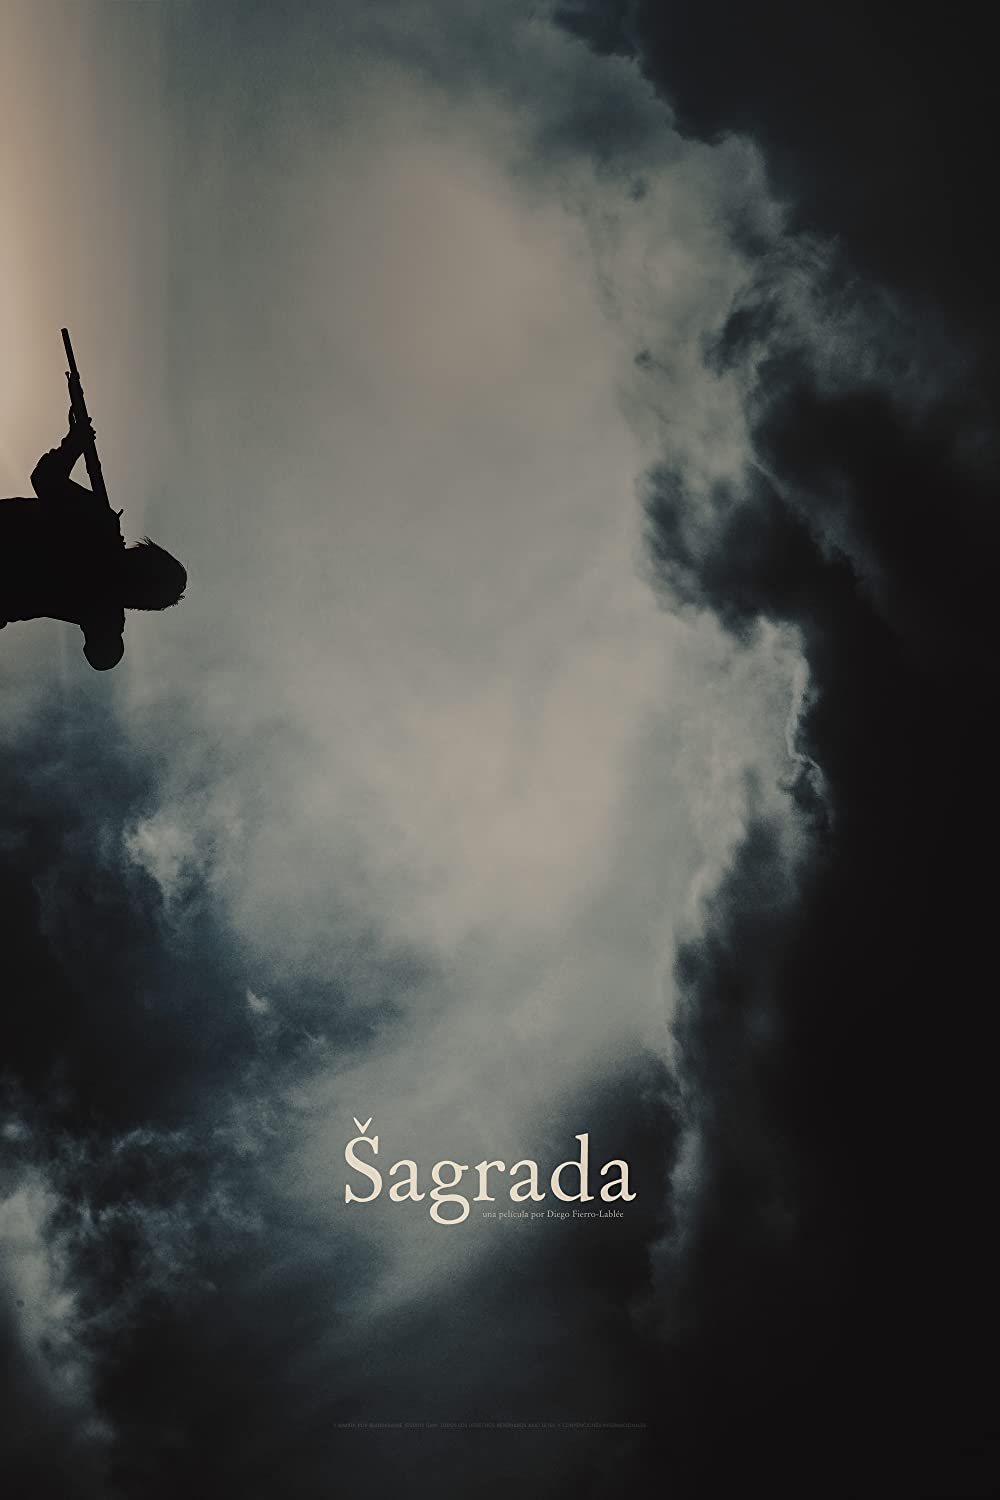 Filmbeschreibung zu Sagrada